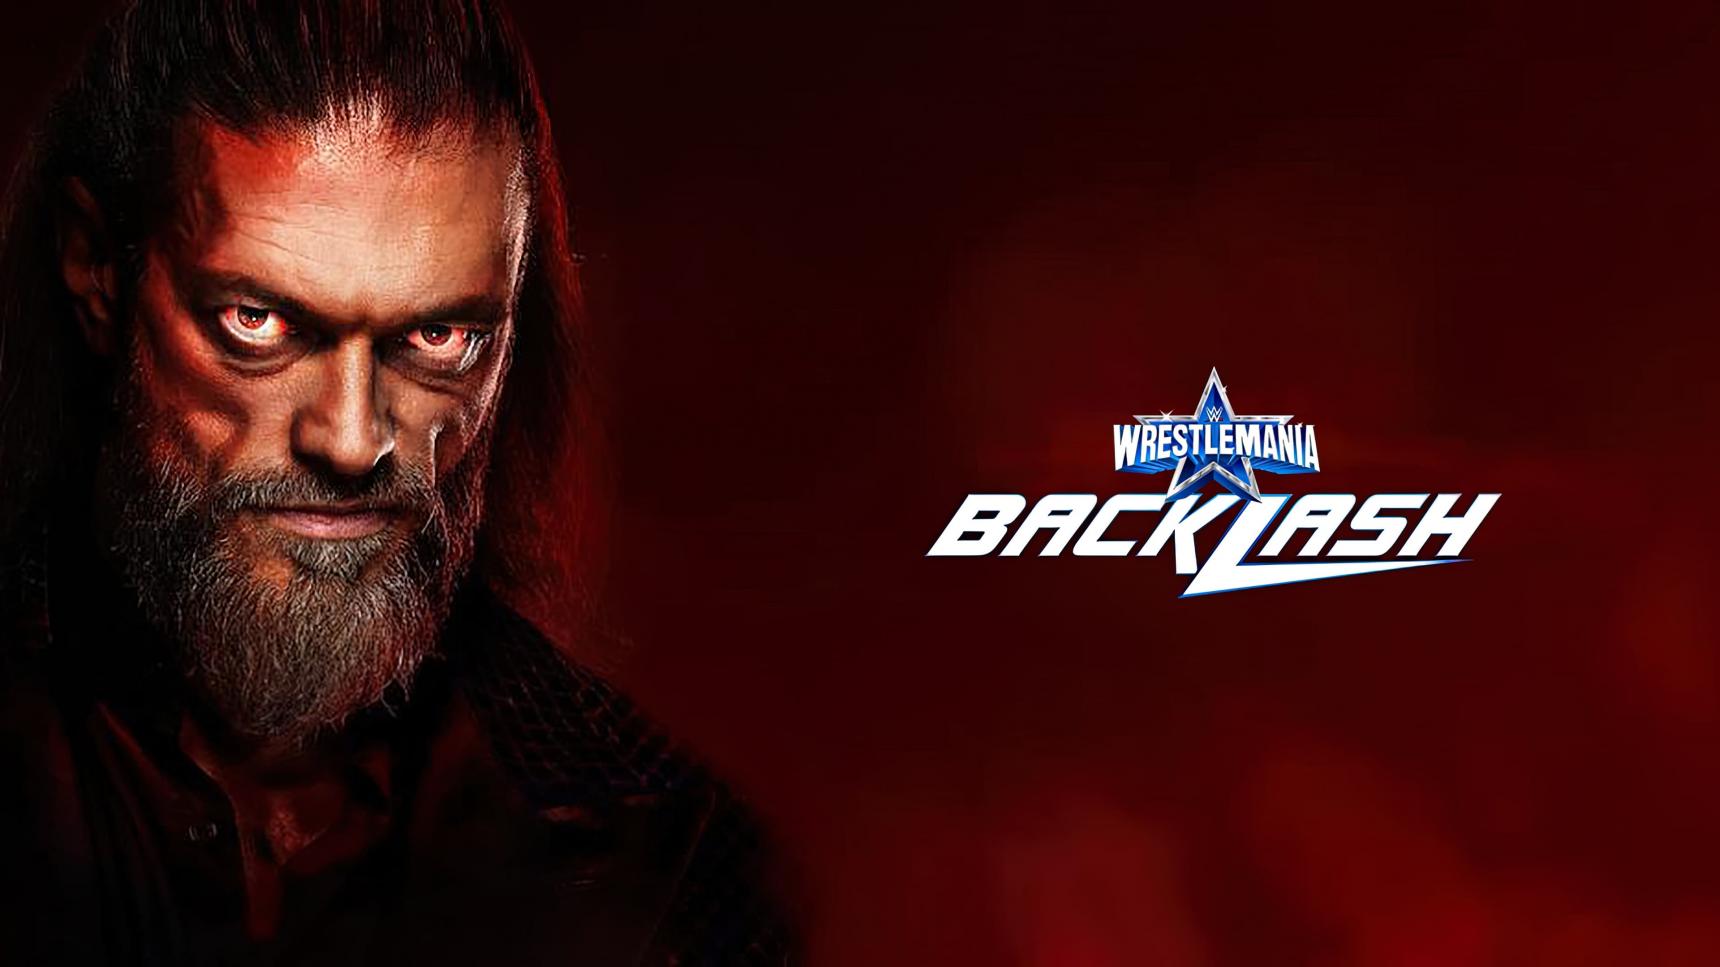 trailer WWE WrestleMania Backlash 2022